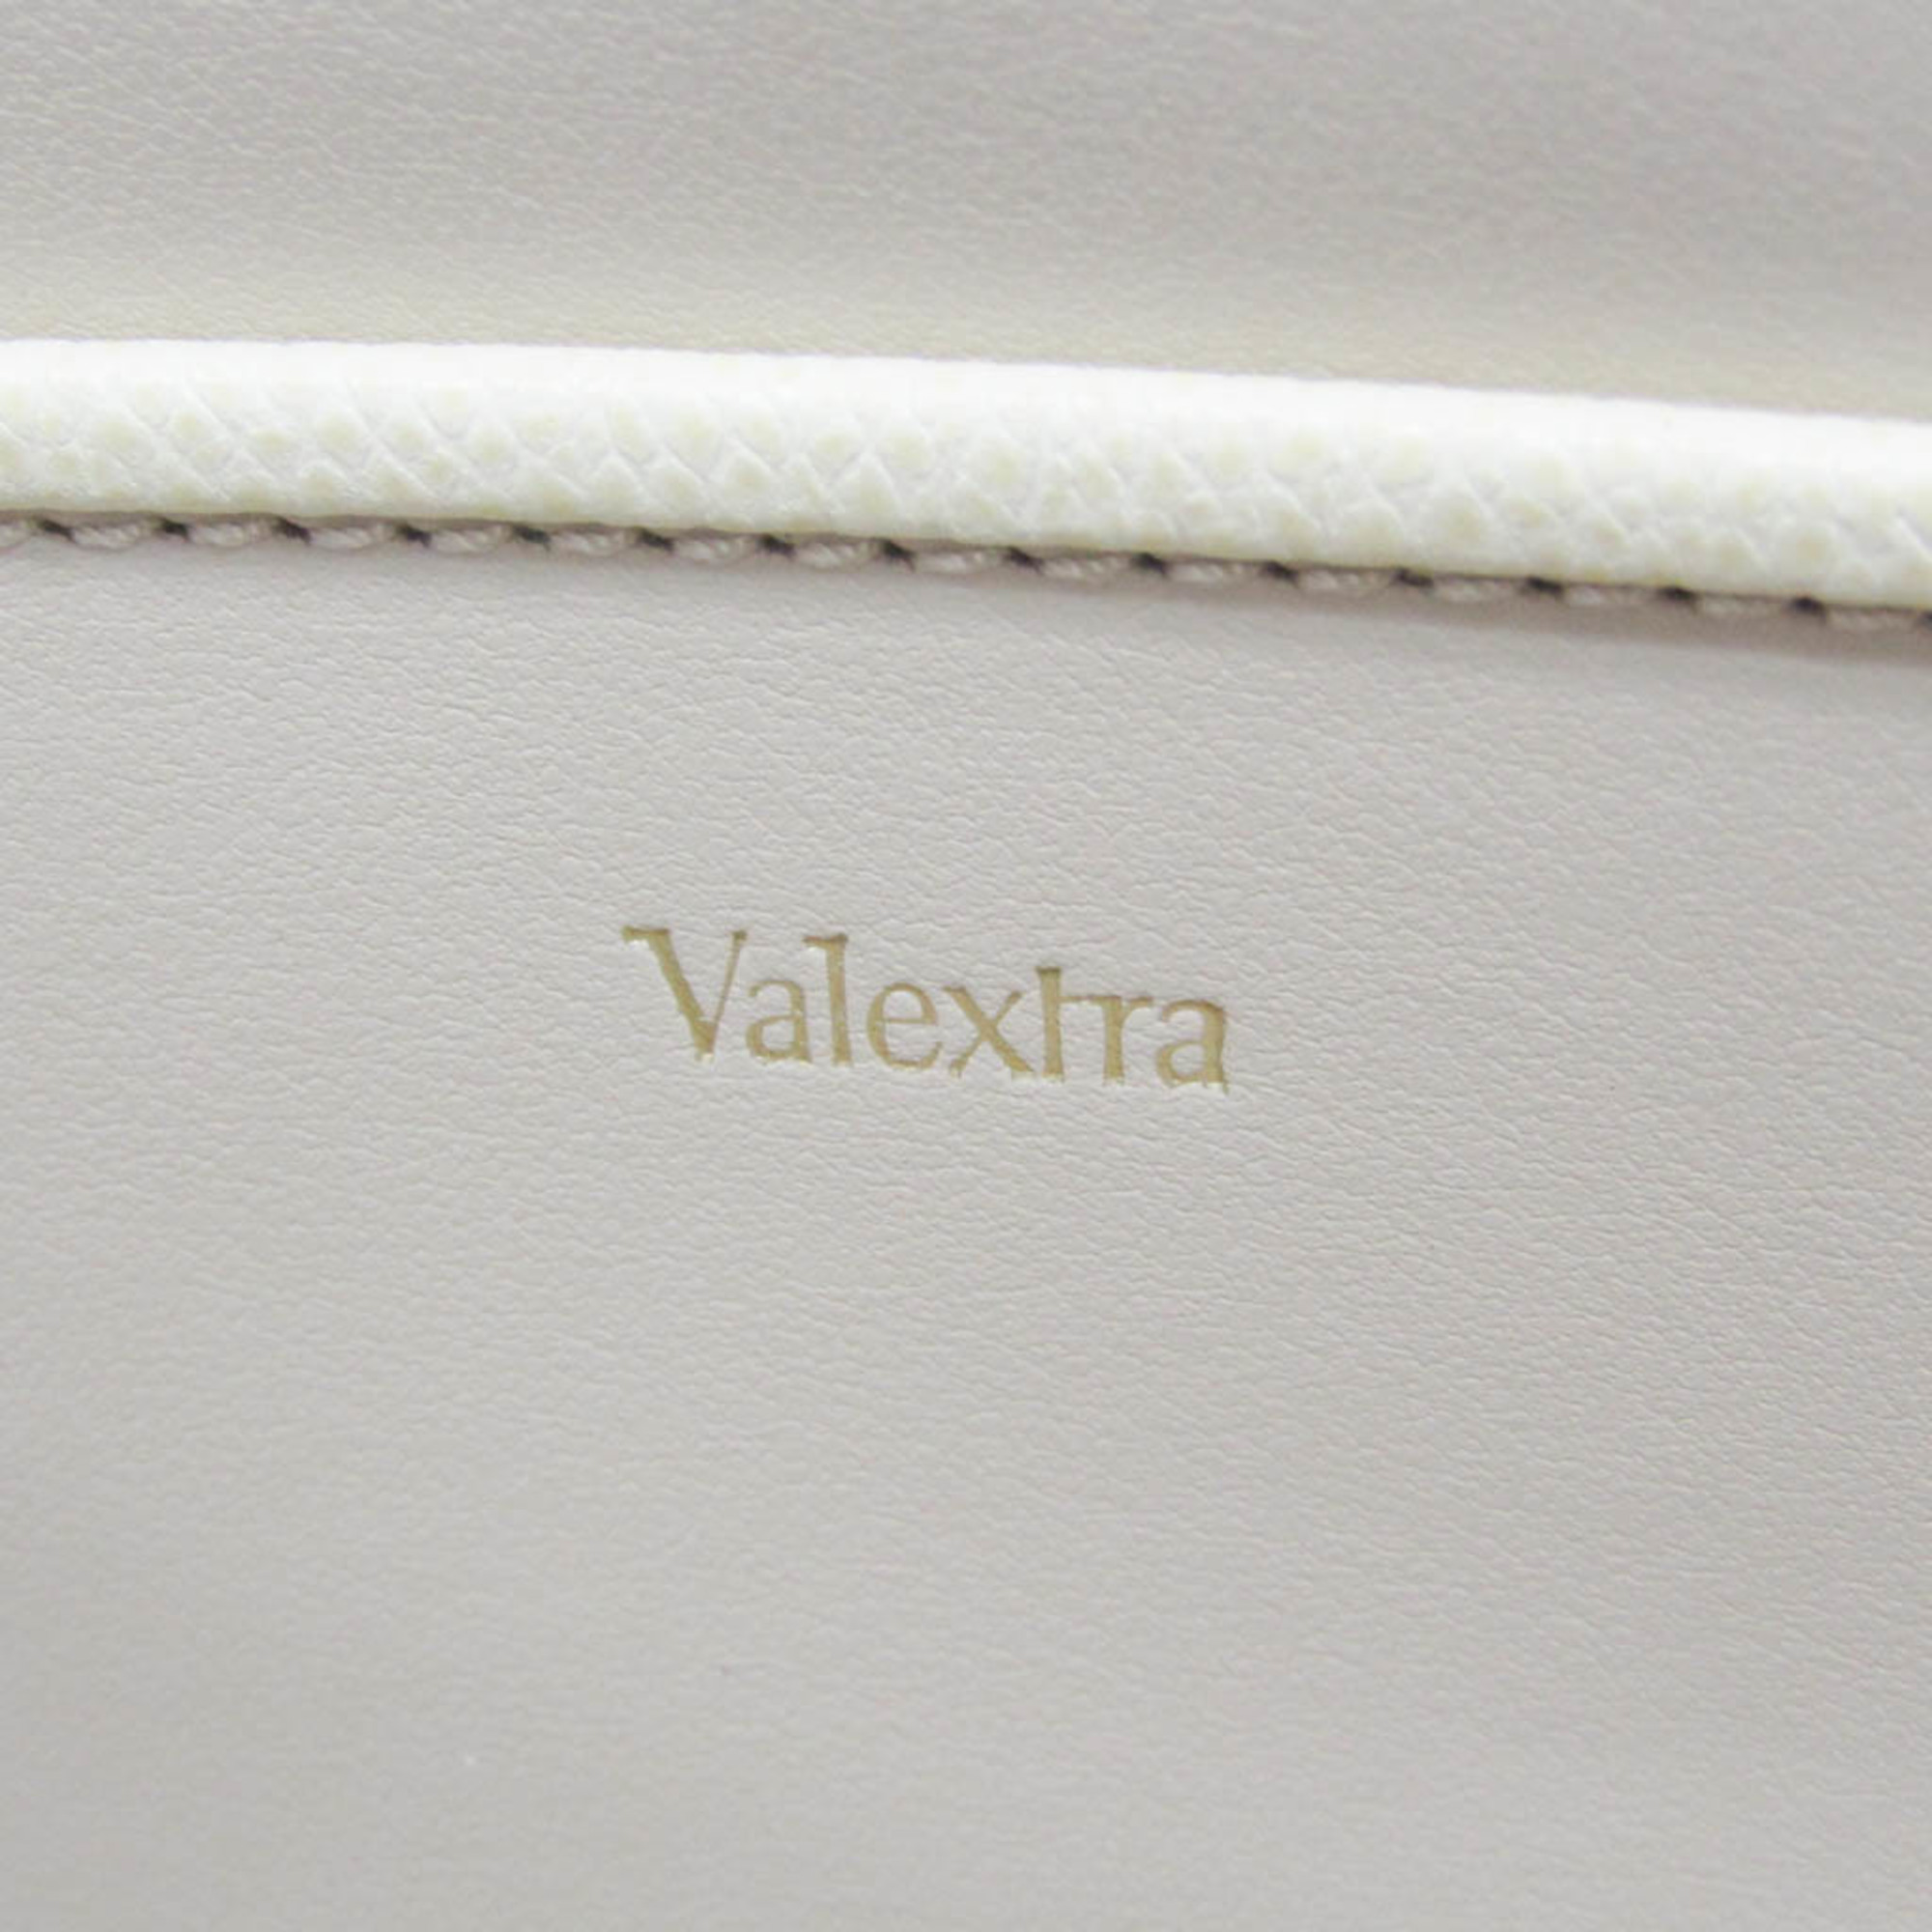 Valextra Men's Leather Clutch Bag Cream